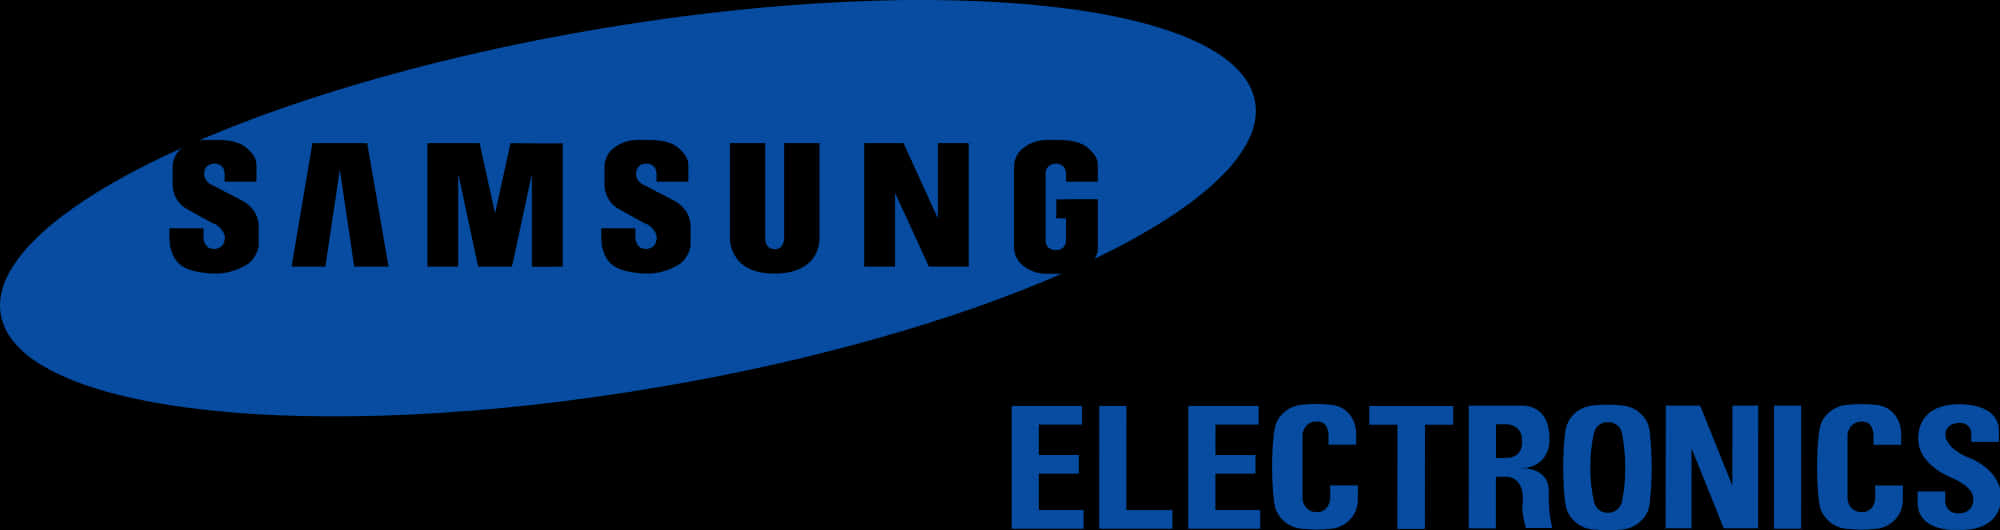 Samsung Electronics Logo Black Background PNG